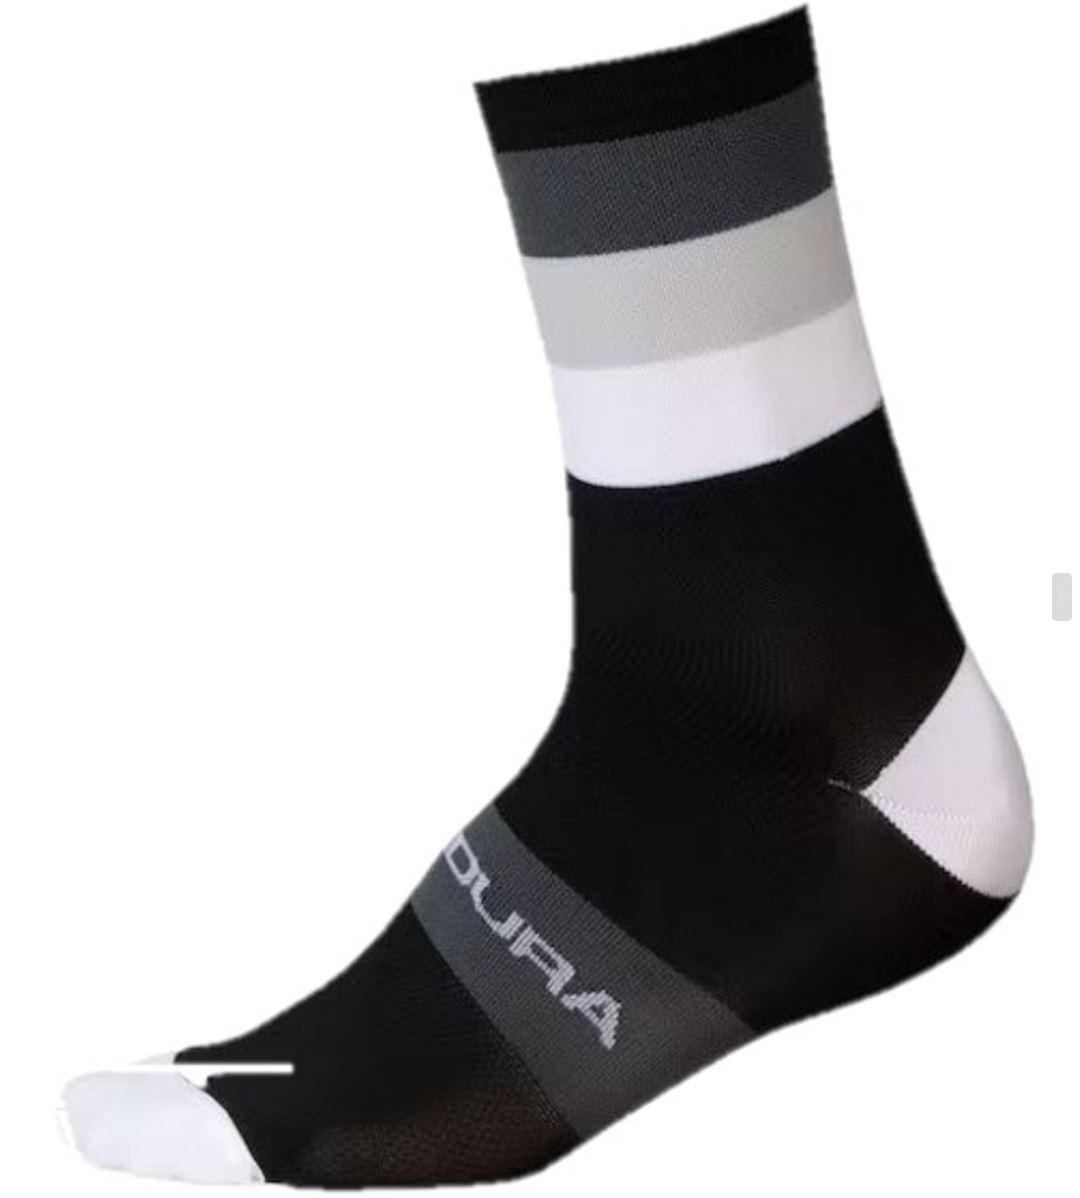 Endura Bandwidth Socken schwarz/weiß